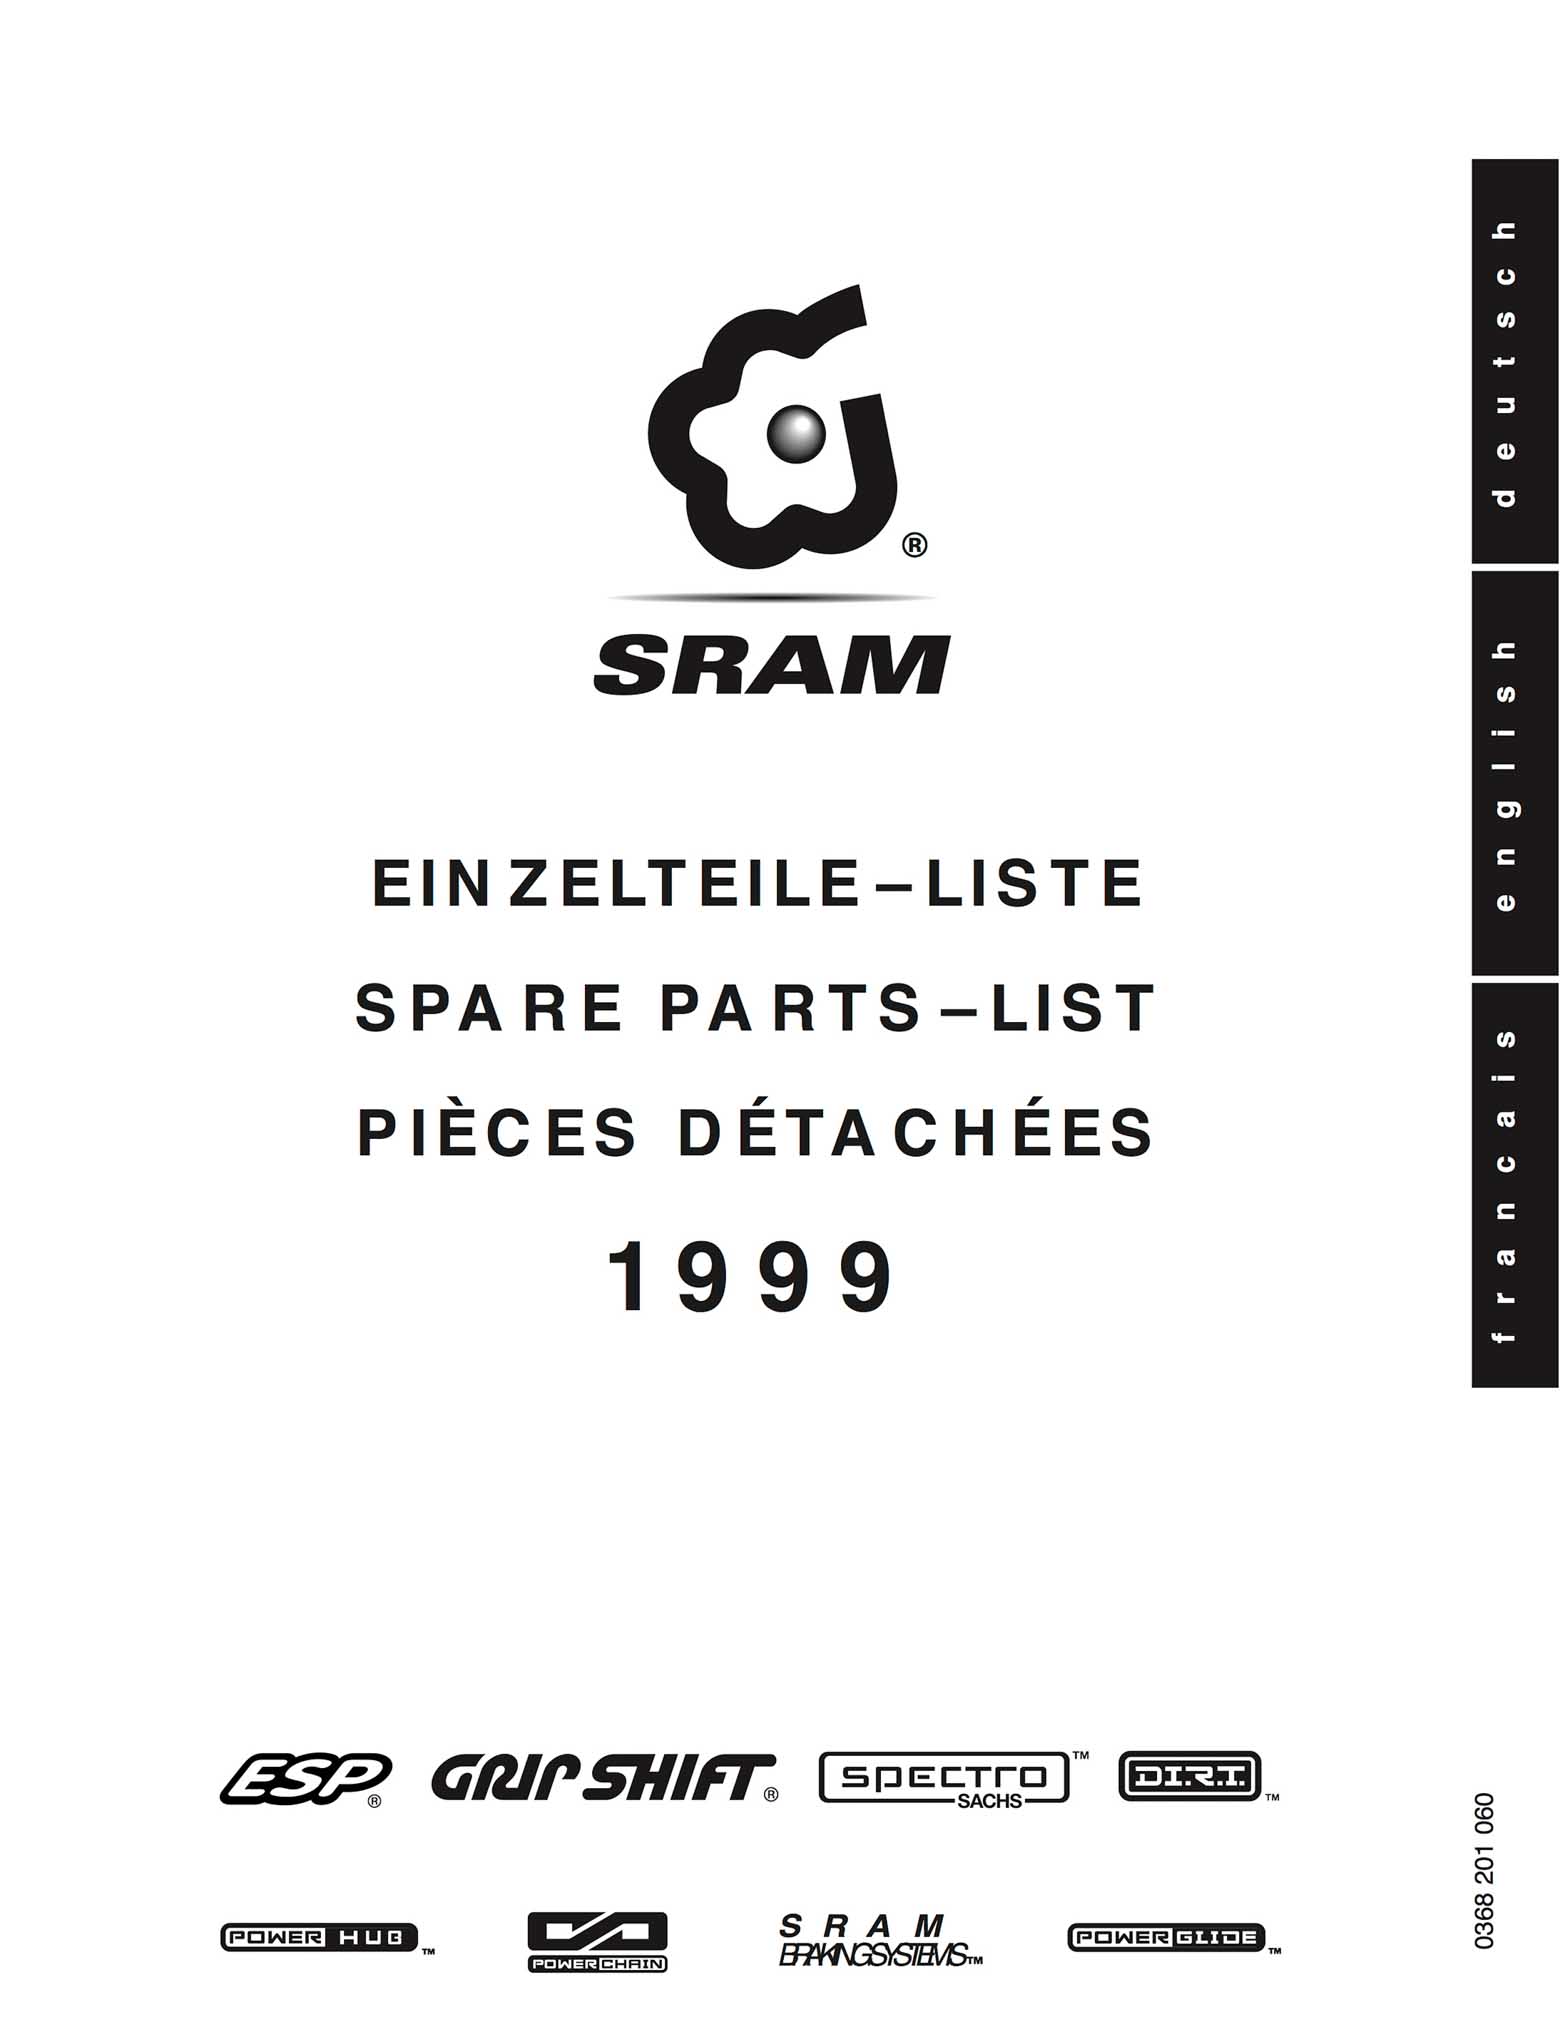 SRAM - Spare Parts List 1999 scan 001 main image